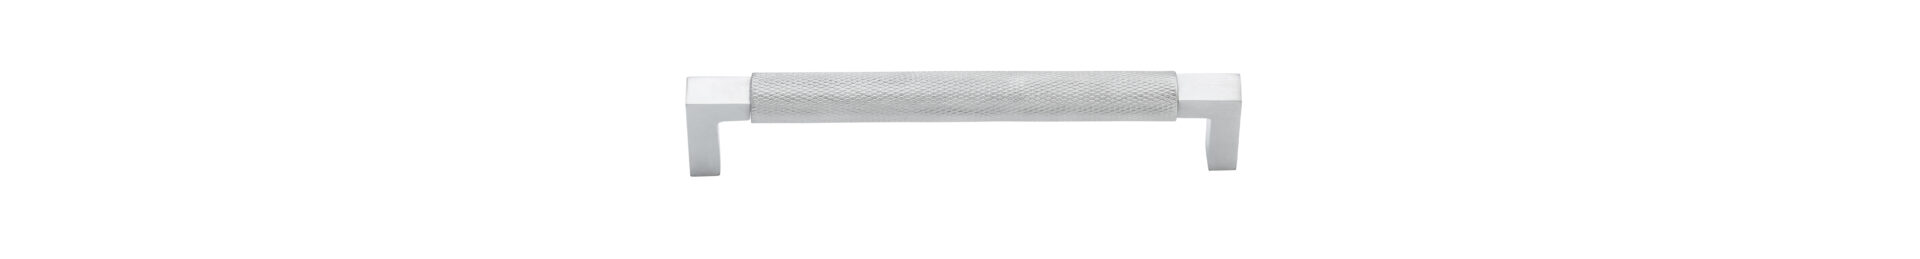 22113 - Brunswick Cabinet Pull - CTC160mm - Brushed Chrome